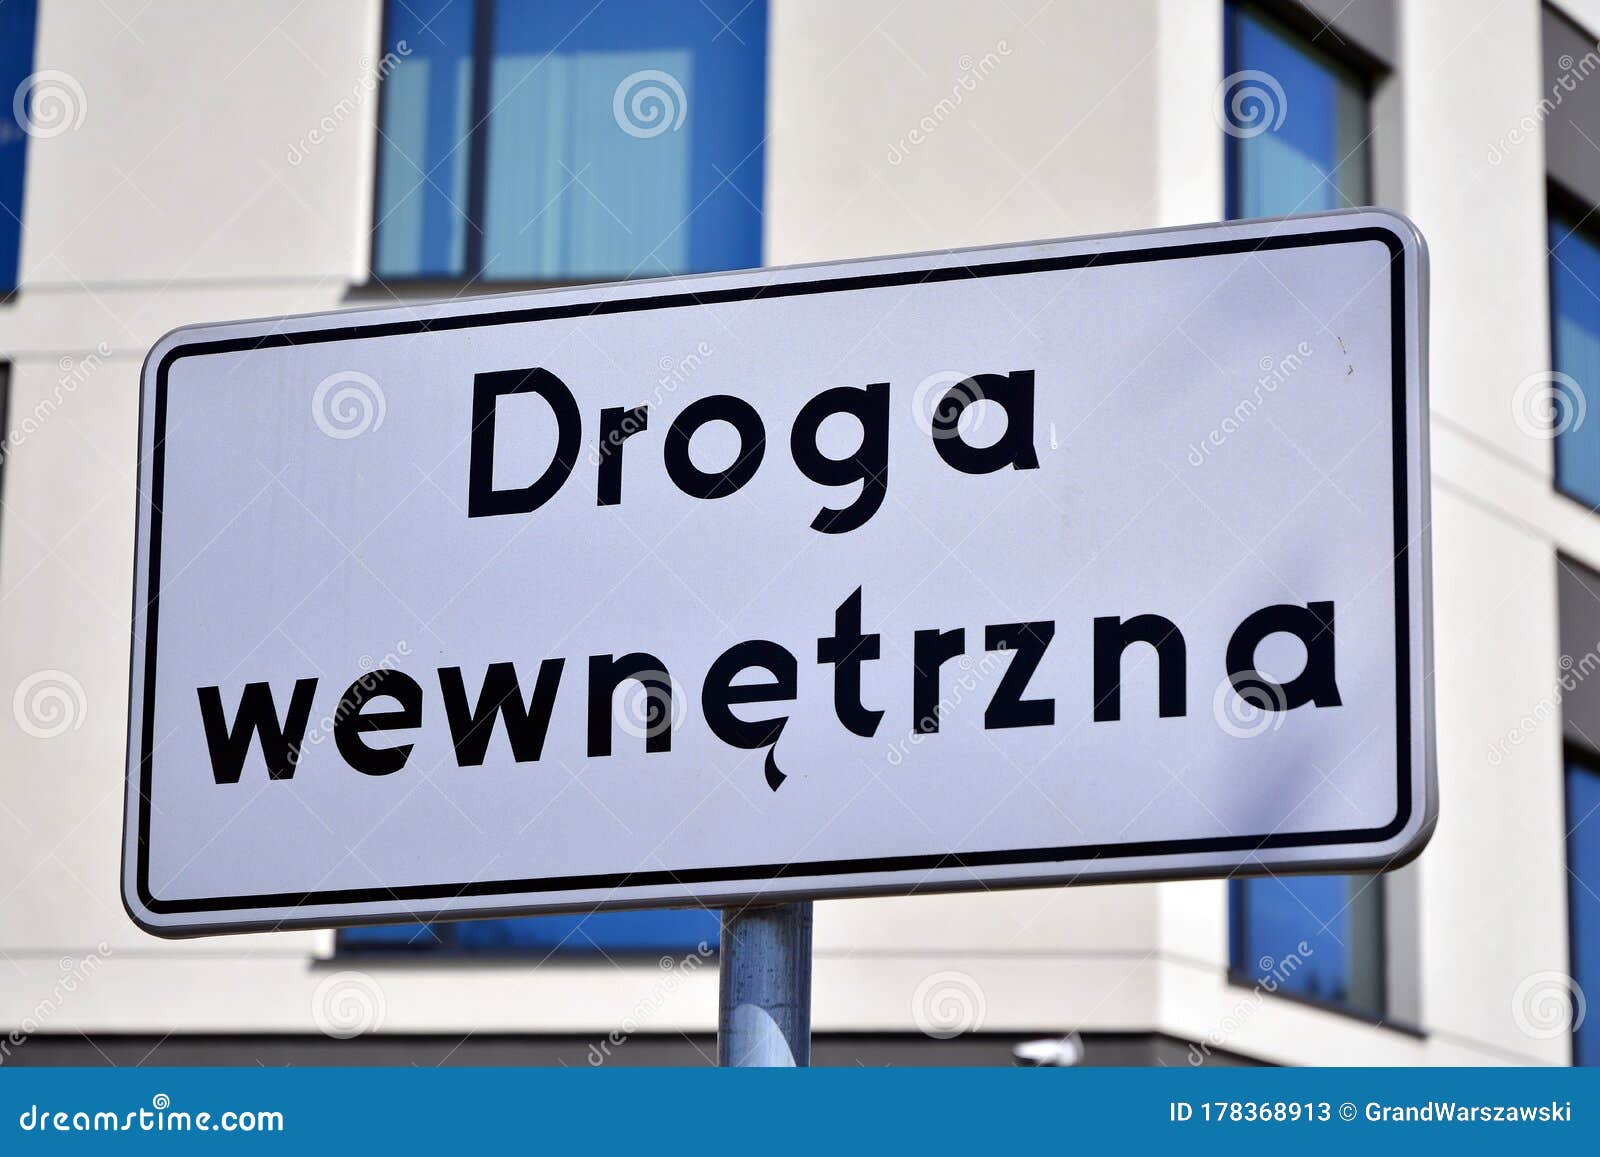 road sign with text internal road droga wewnetrzna